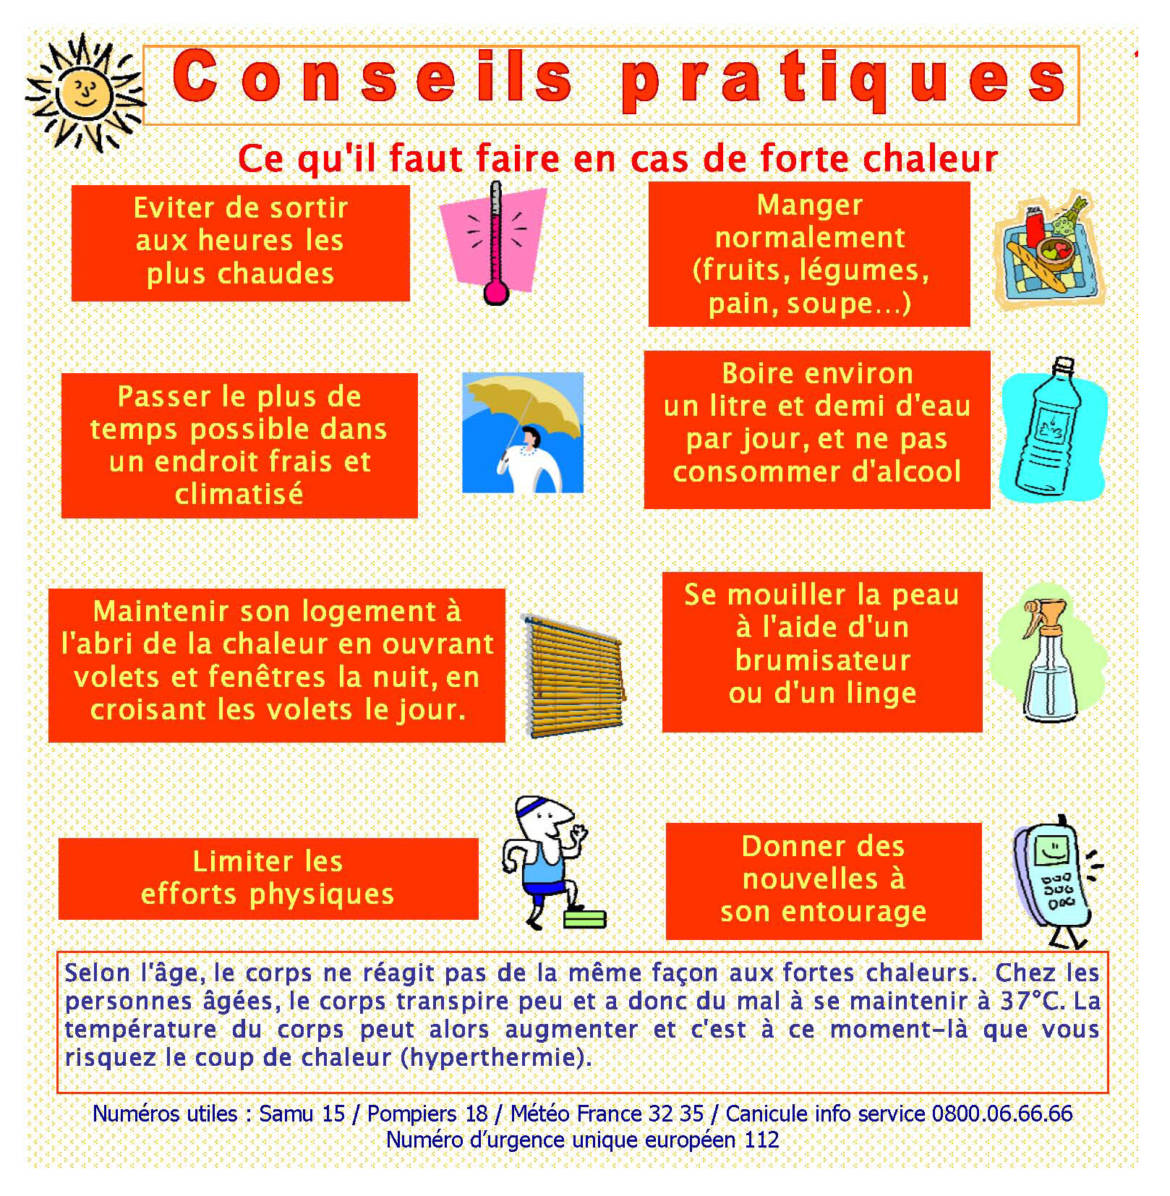 Canicule-Conseils-pratiques.jpg